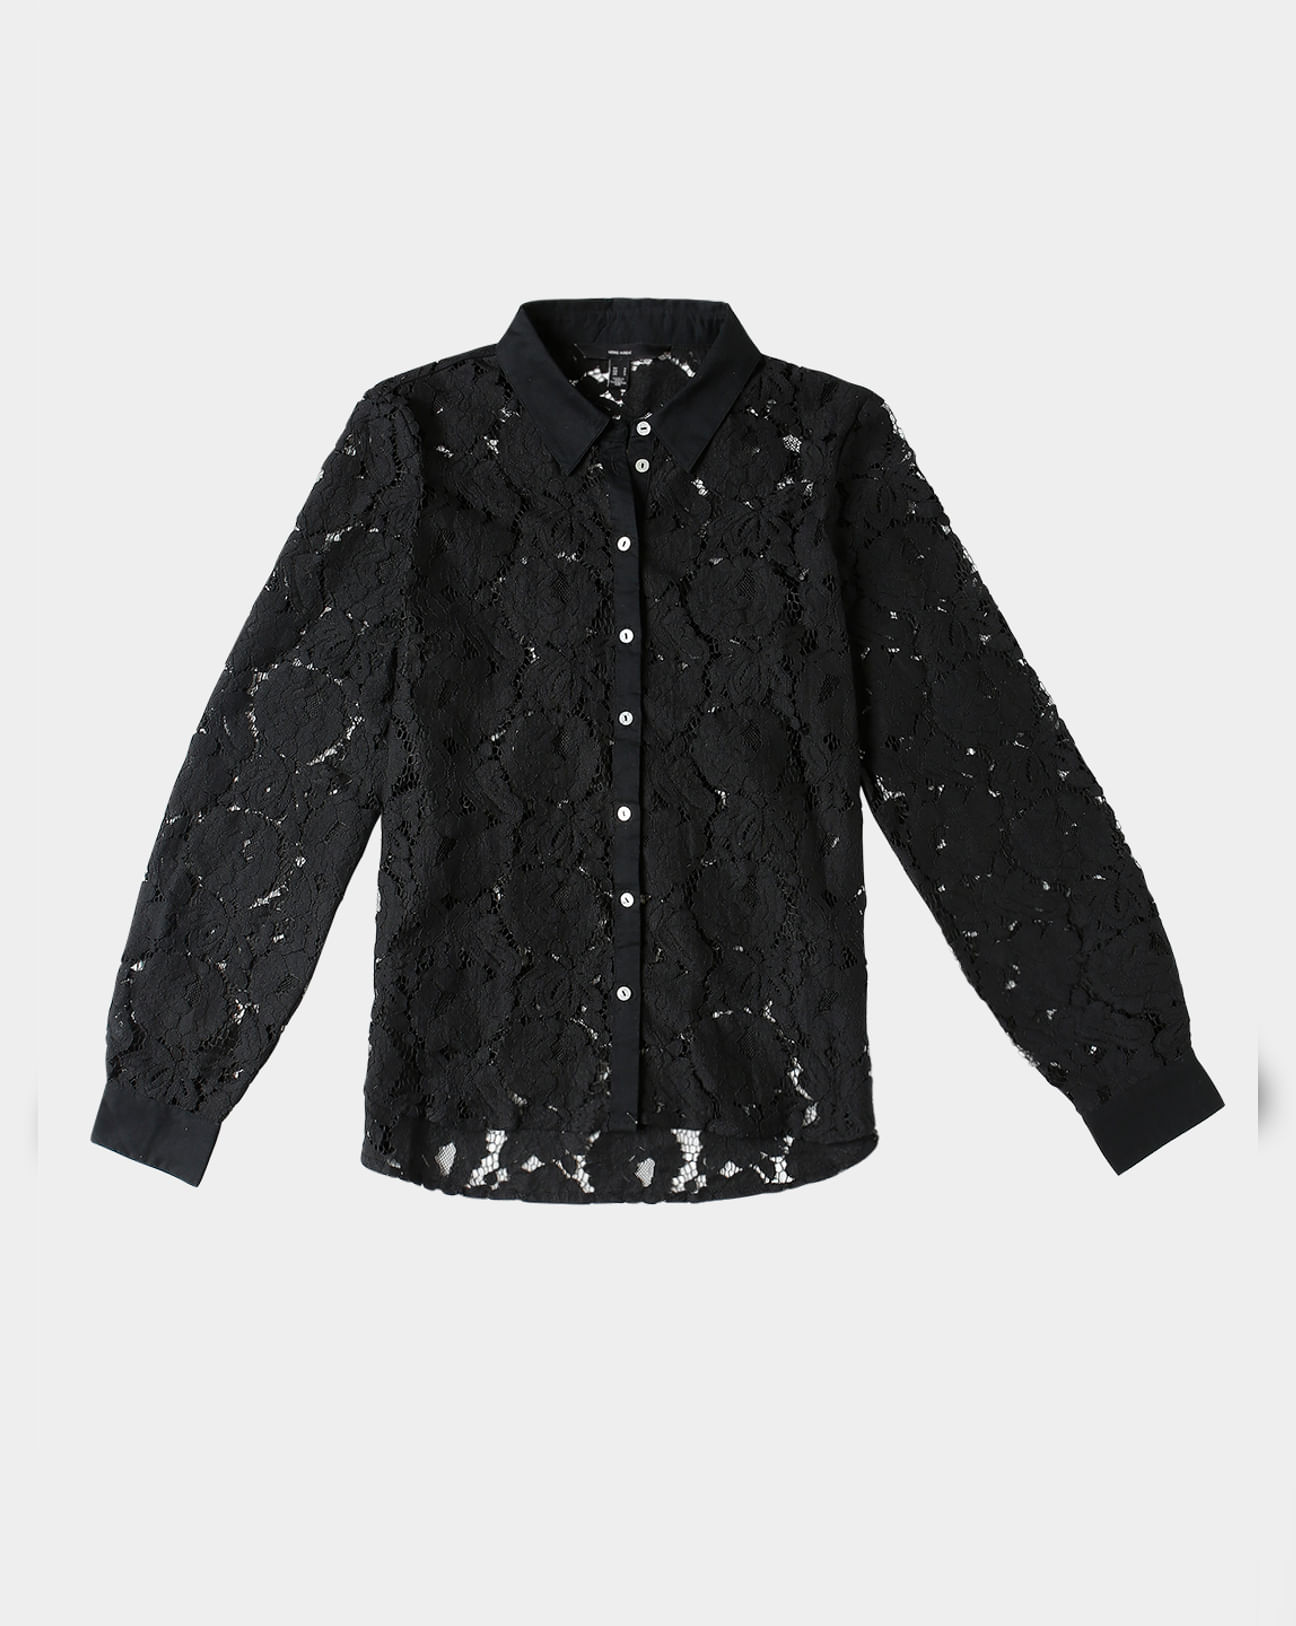 Lace Black Shirt